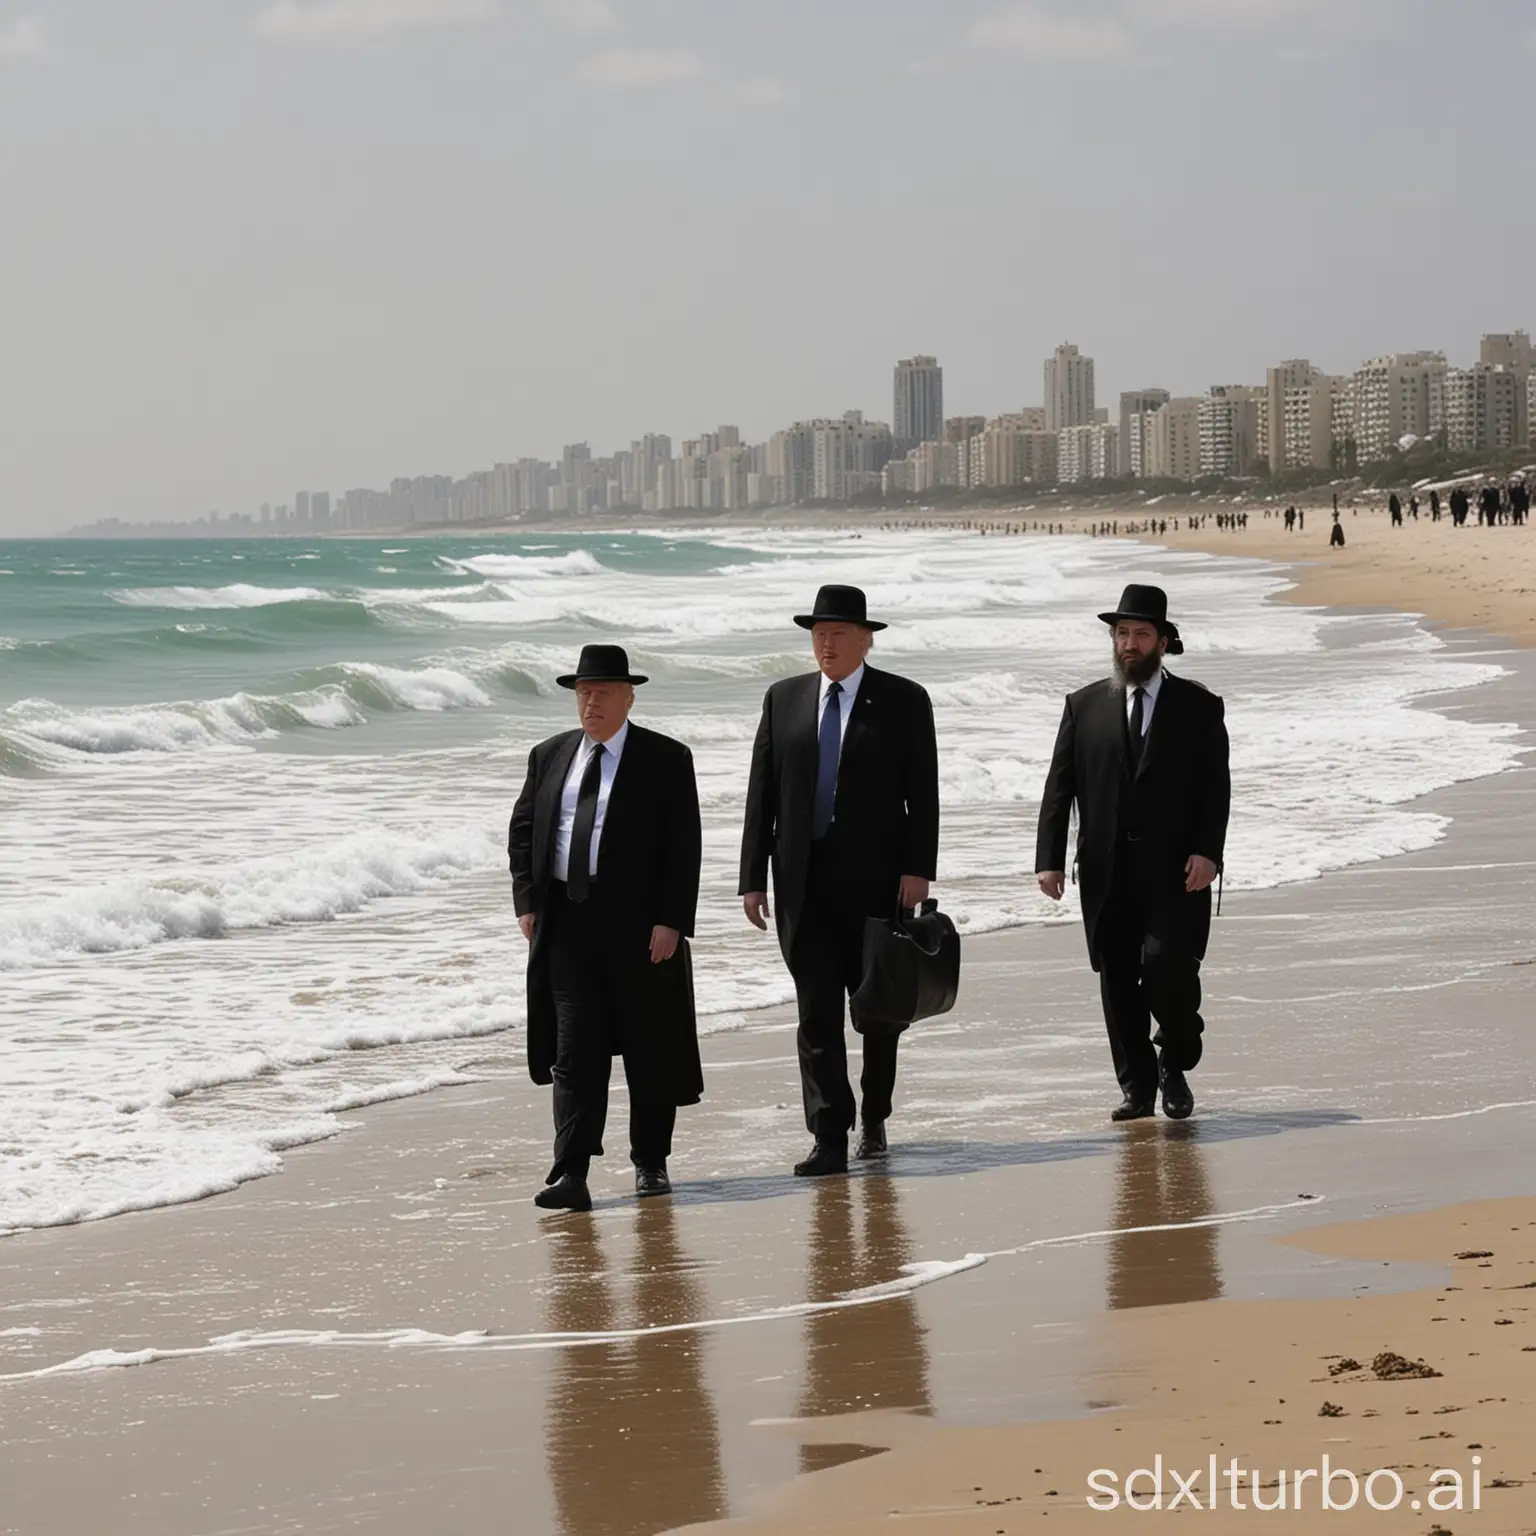 Orthodox-Hasidic-Men-Walking-on-Beach-with-Donald-Trump